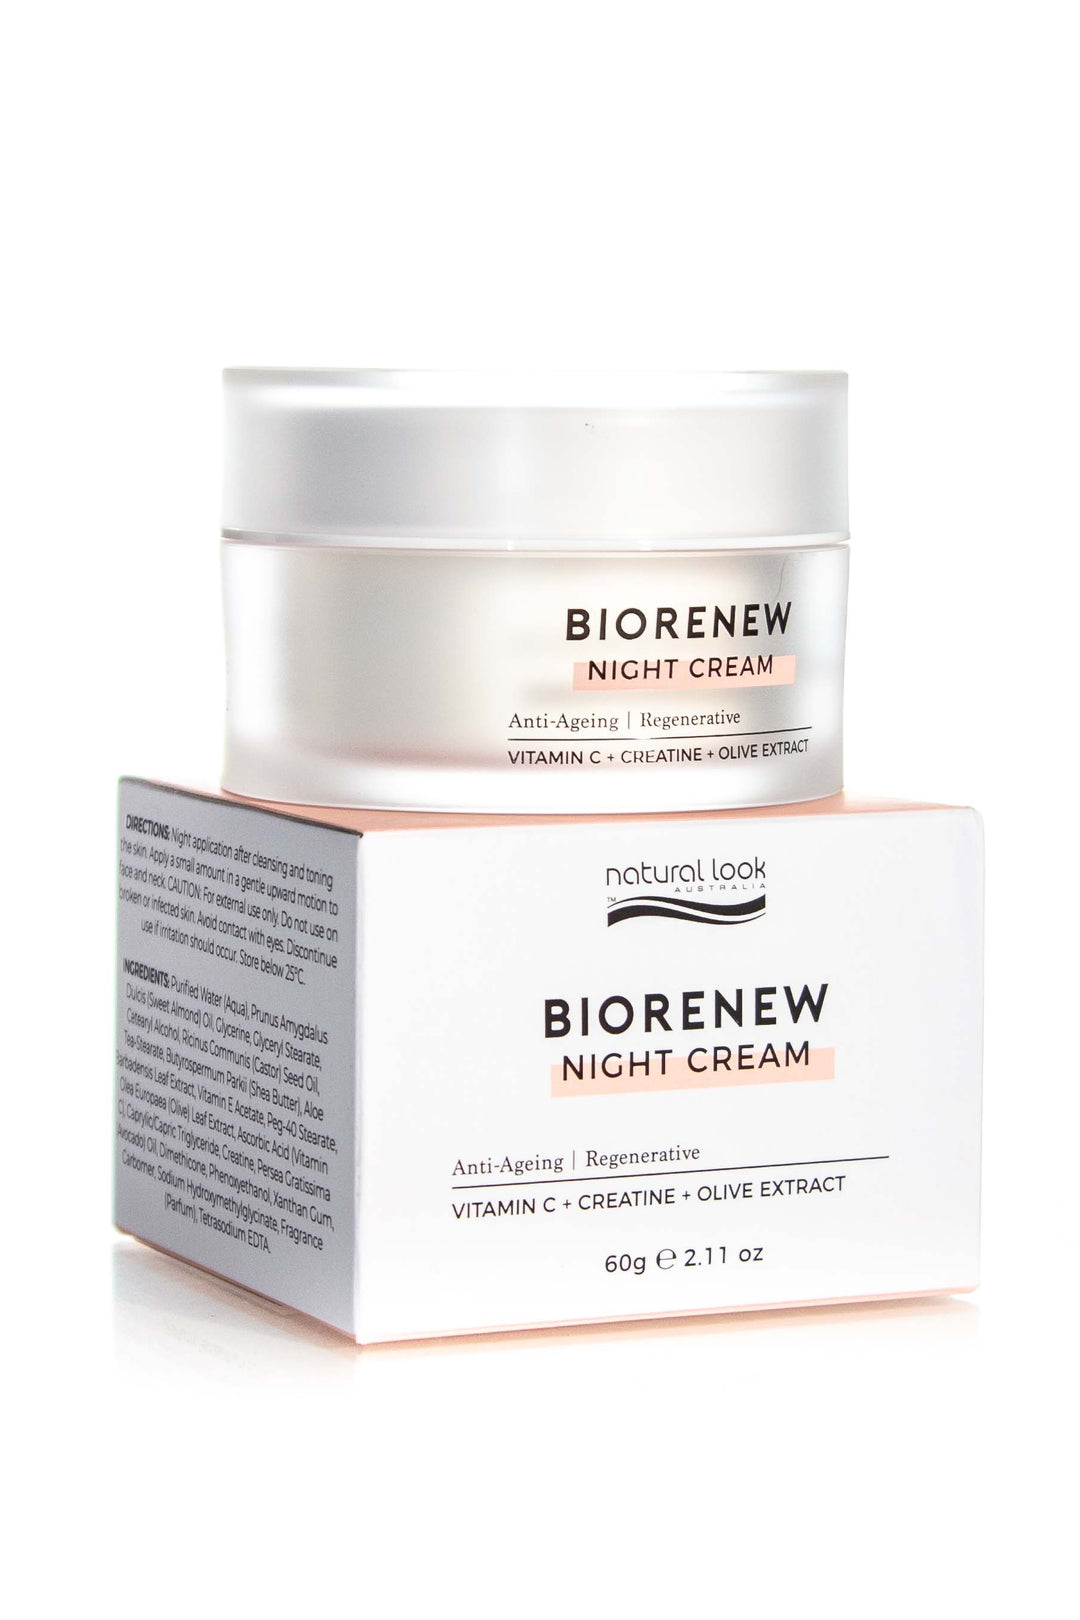 NATURAL LOOK Immaculate Biorenew Night Cream  |  Various Sizes